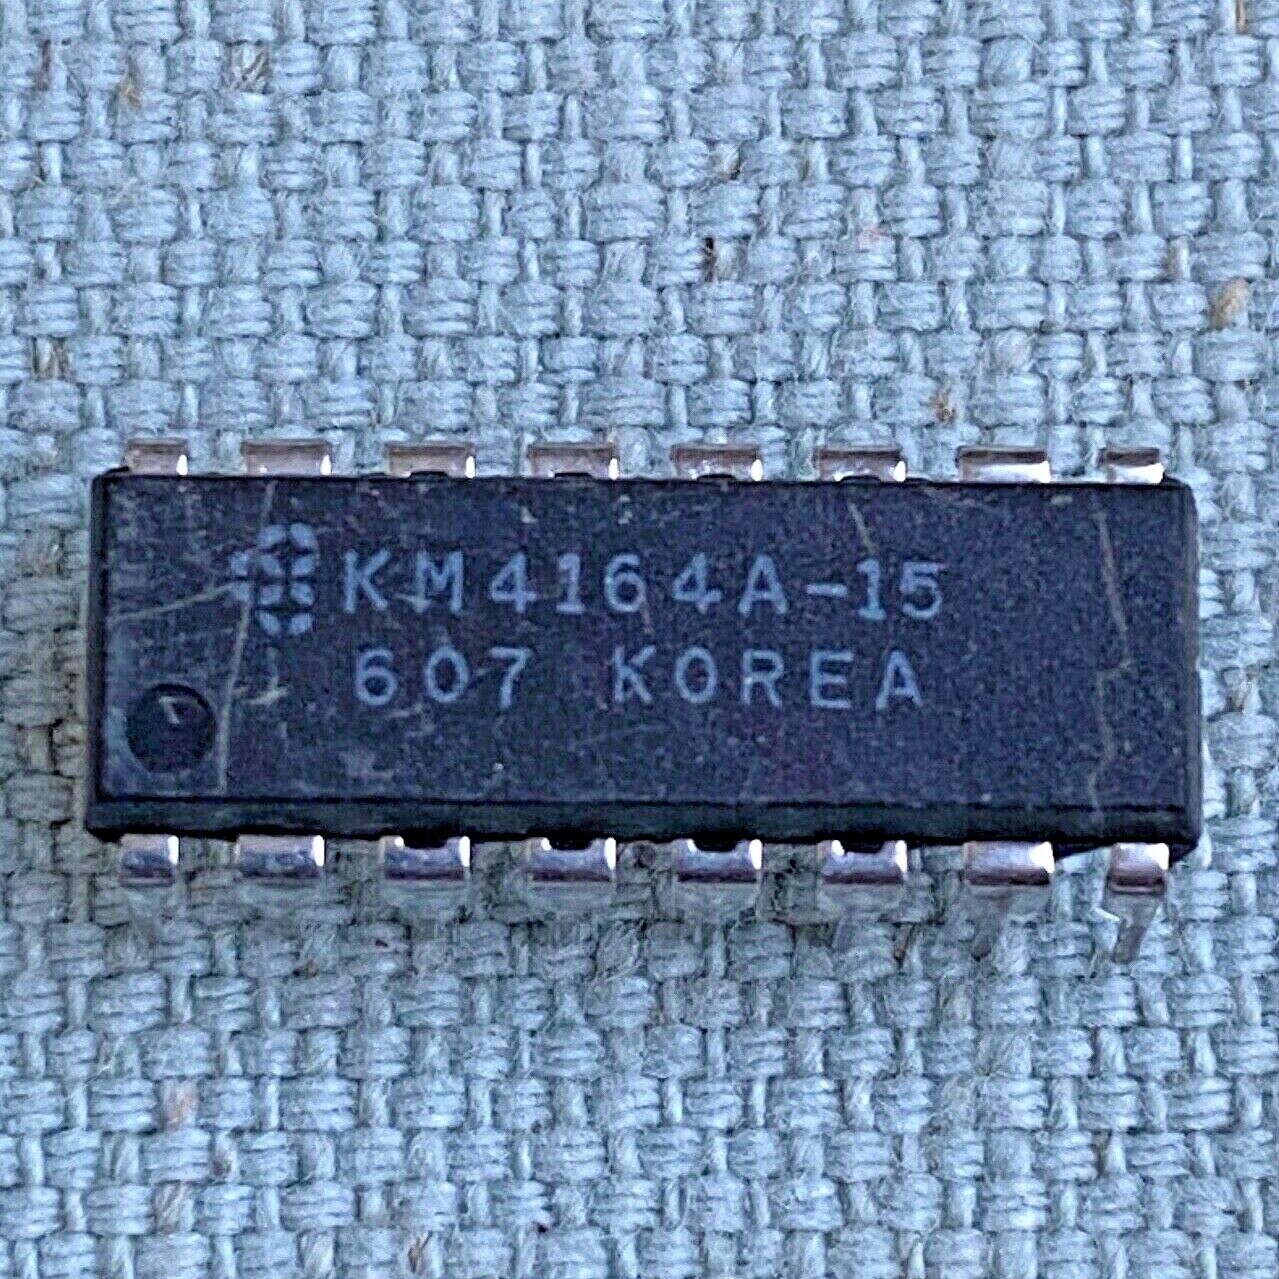 Samsung KM4164A-15 DRAM 16 Pin DIP 4164N Lot of 4 Vintage Computer Parts IC Chip